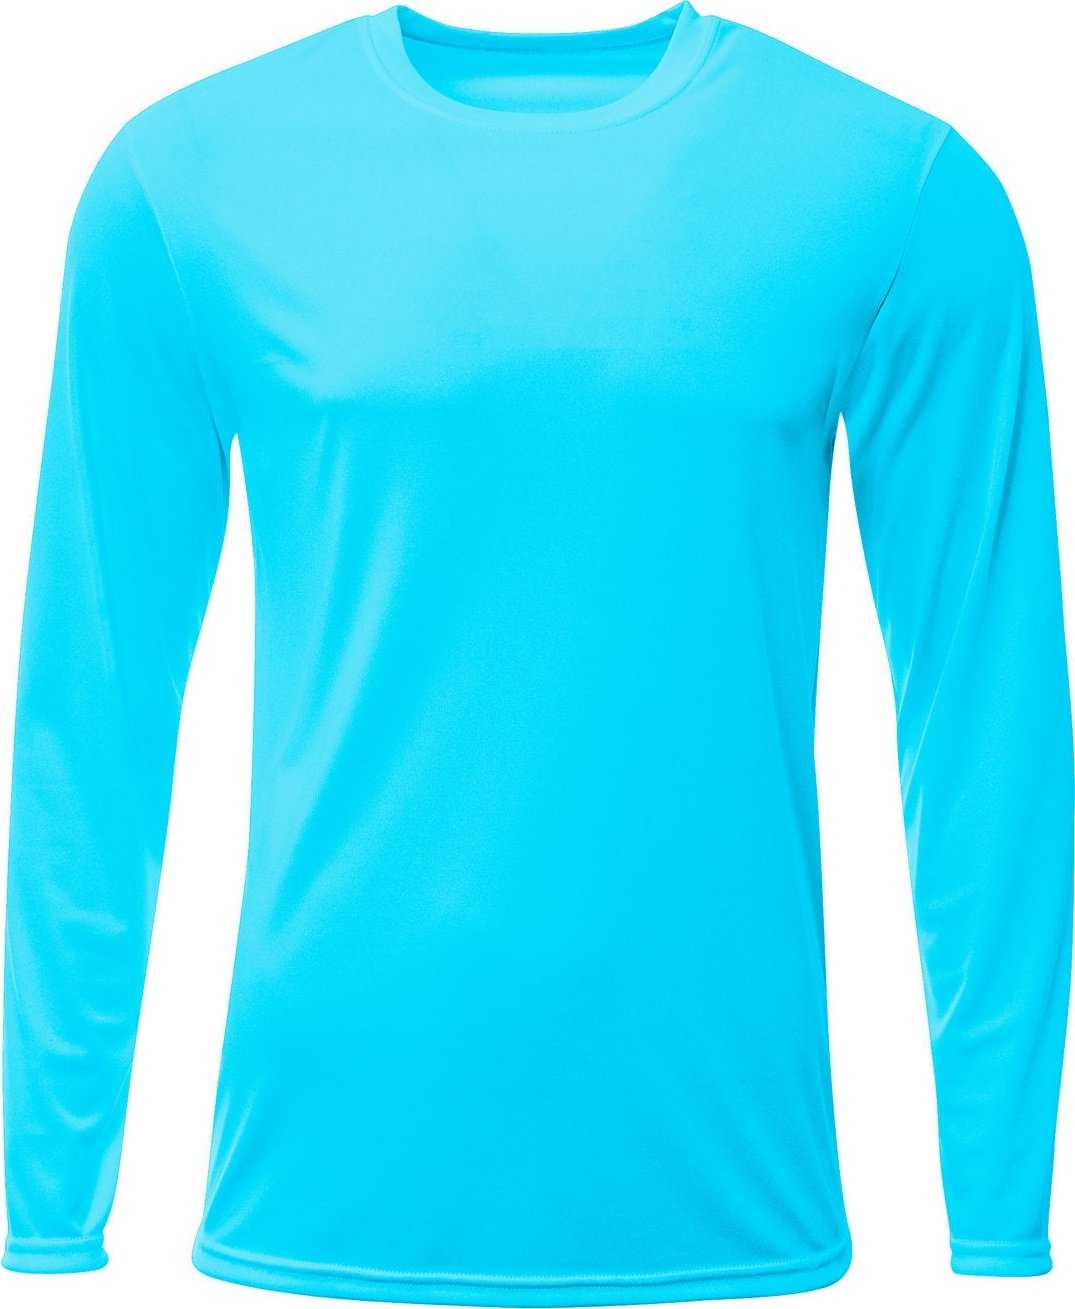 A4 NB3425 Youth Long Sleeve Sprint T-Shirt - Electric Blue